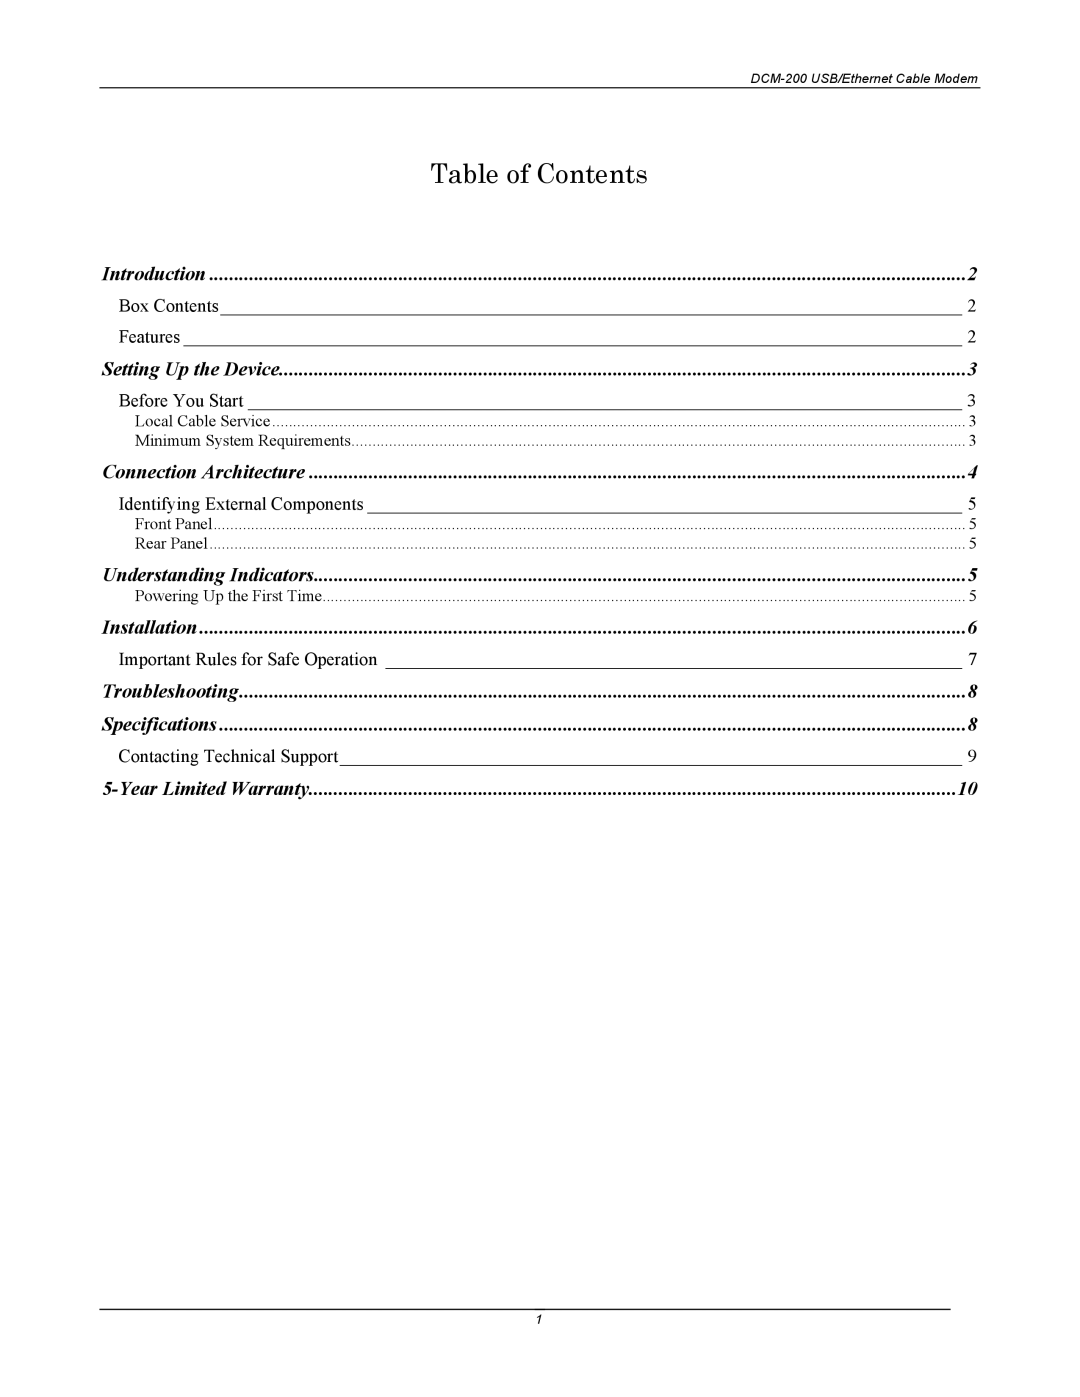 D-Link DCM-200 manual Table of Contents 